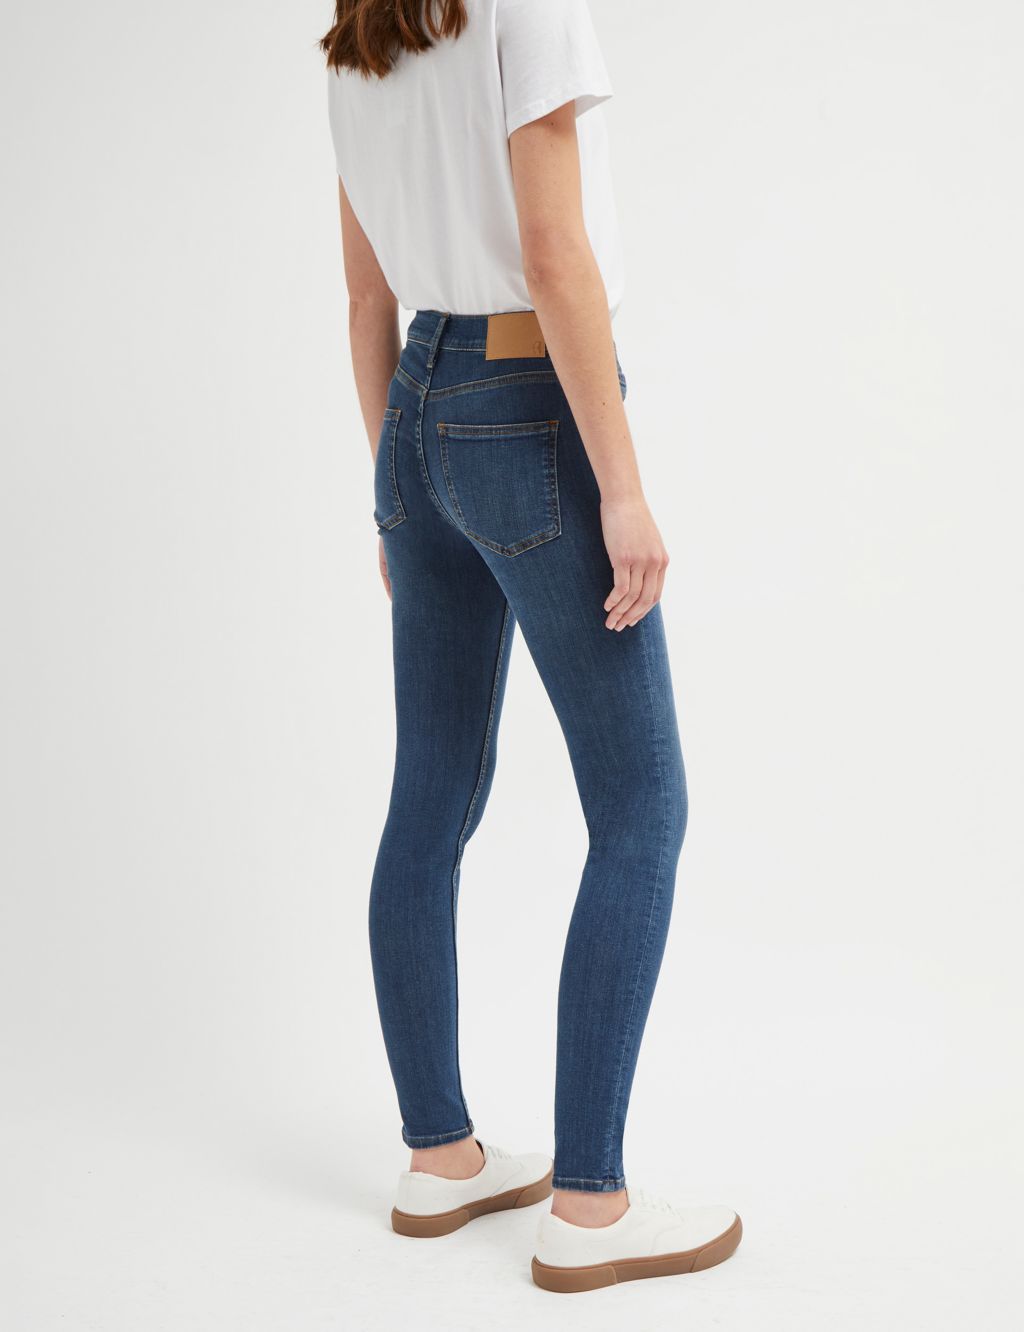 Skinny Ankle Grazer Jeans image 3